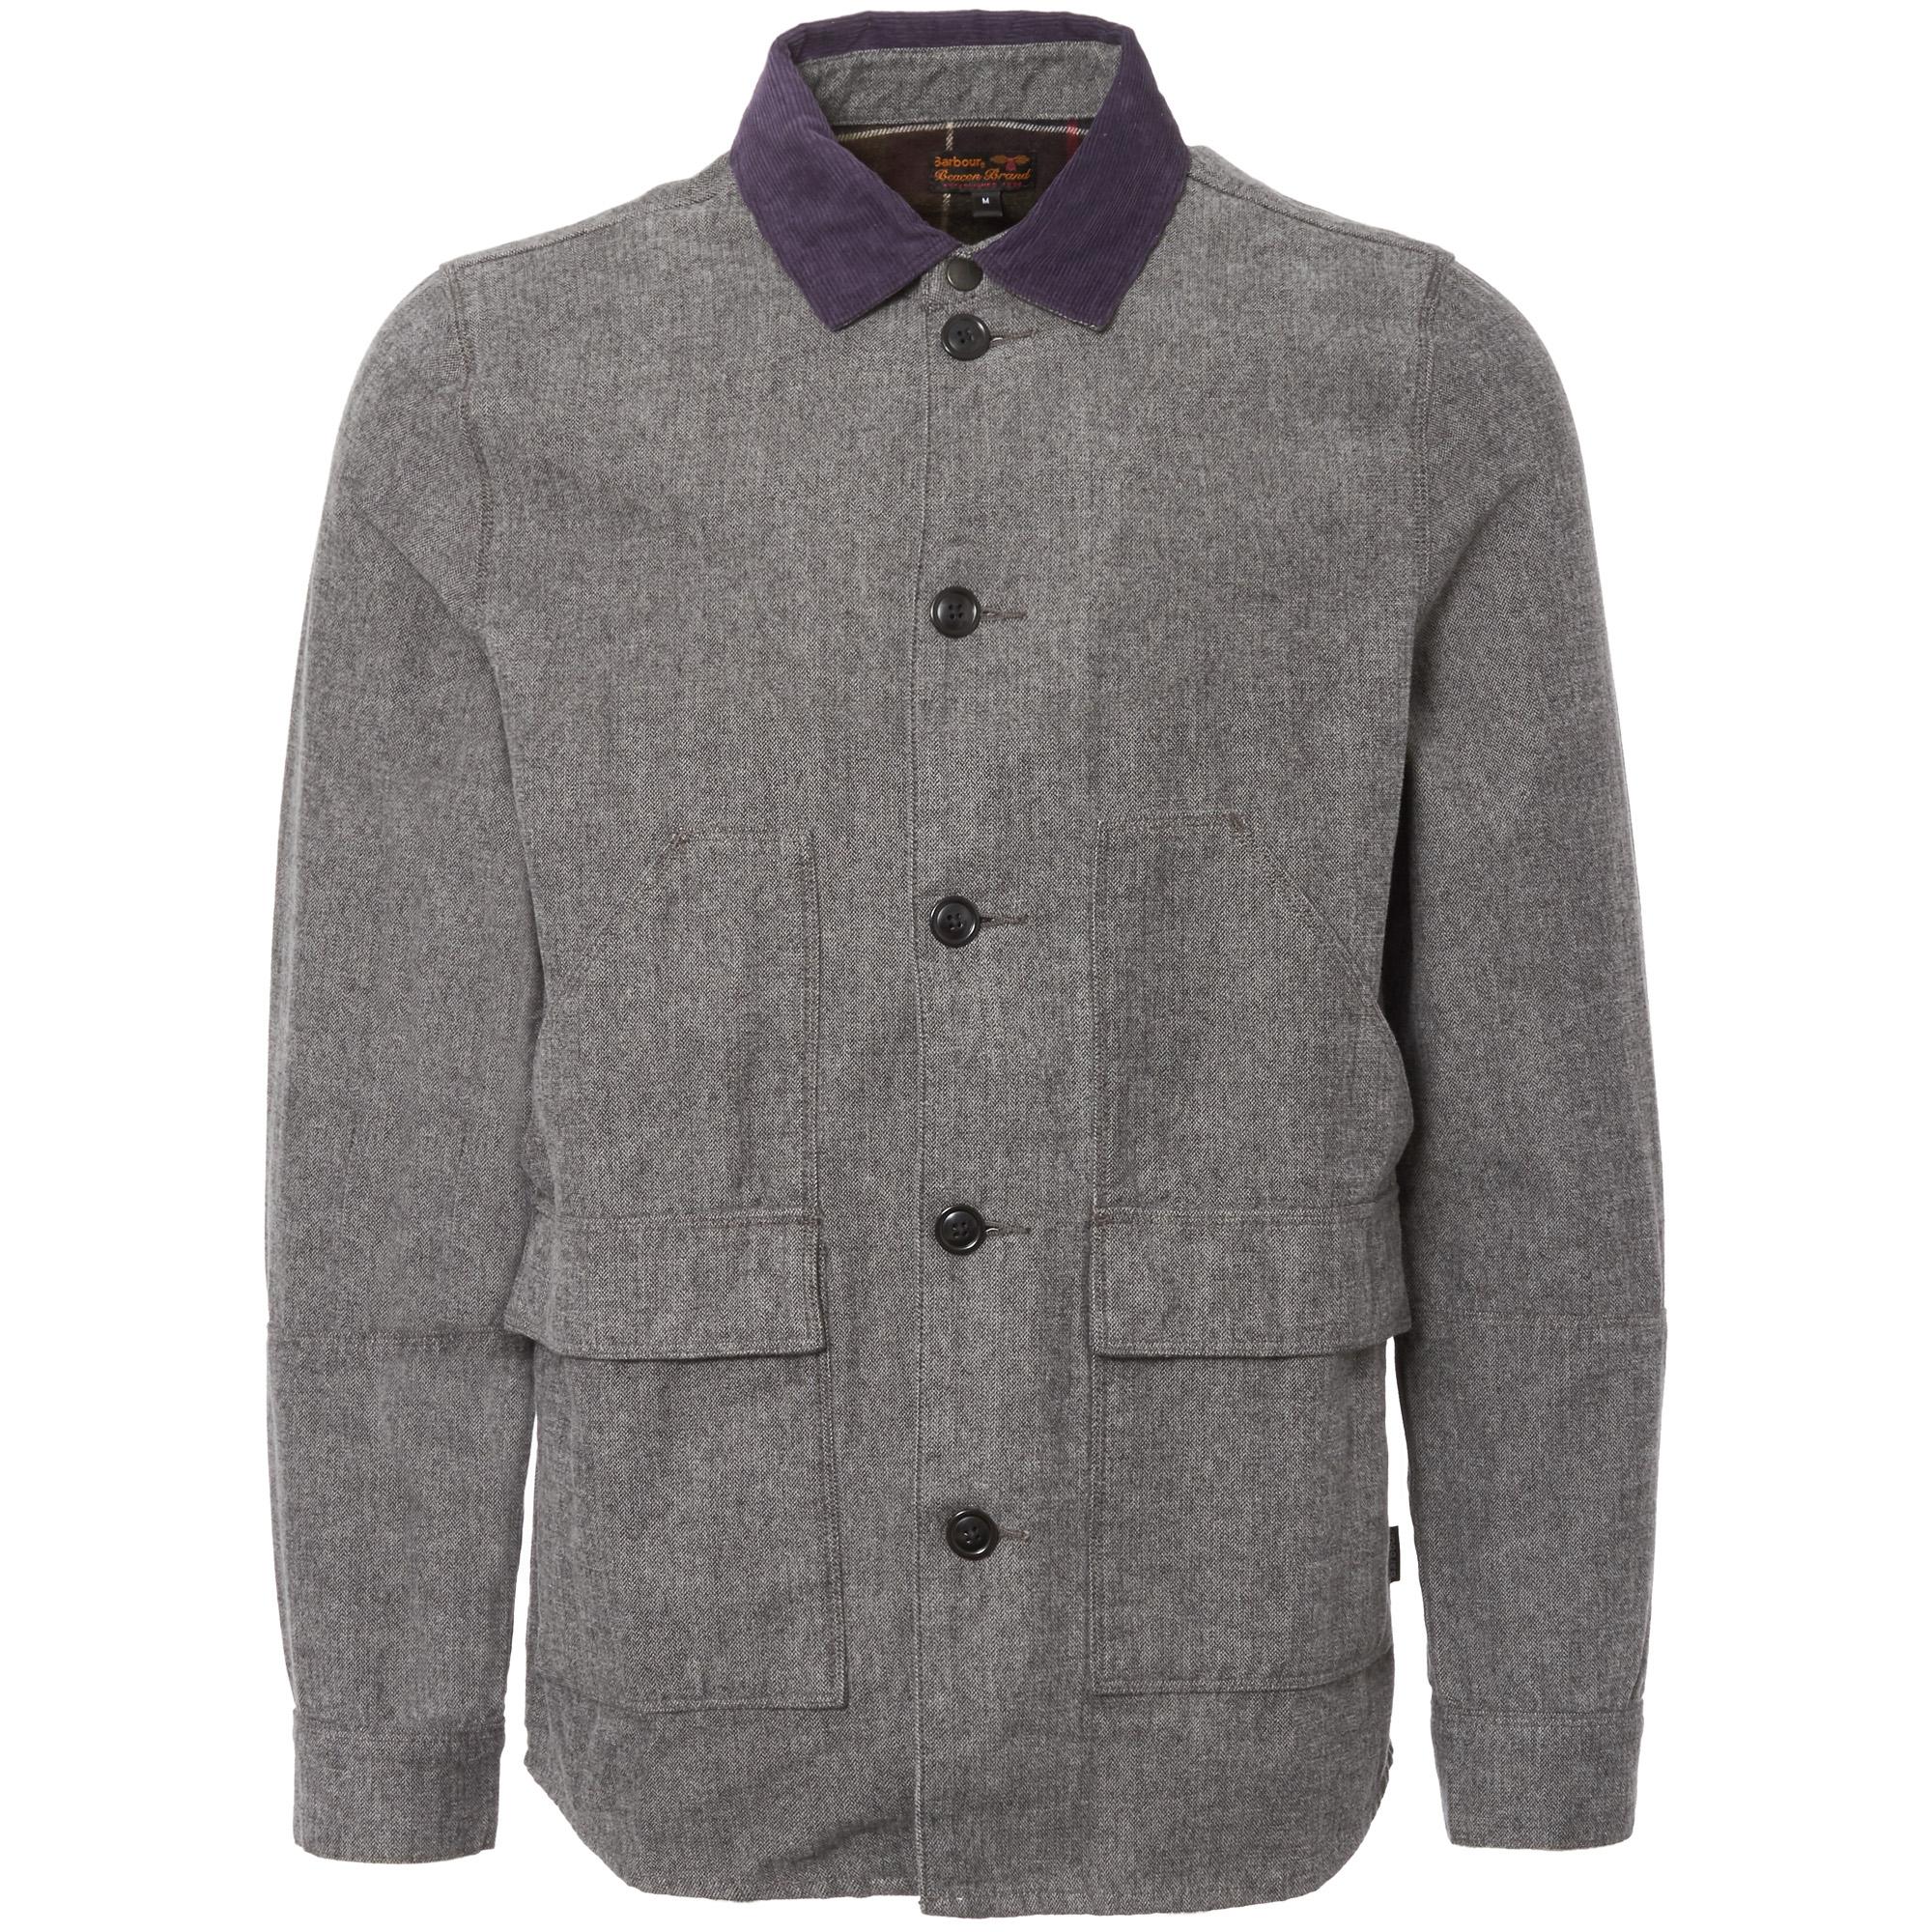 Lyst - Barbour Grey Earmont Overshirt in Gray for Men